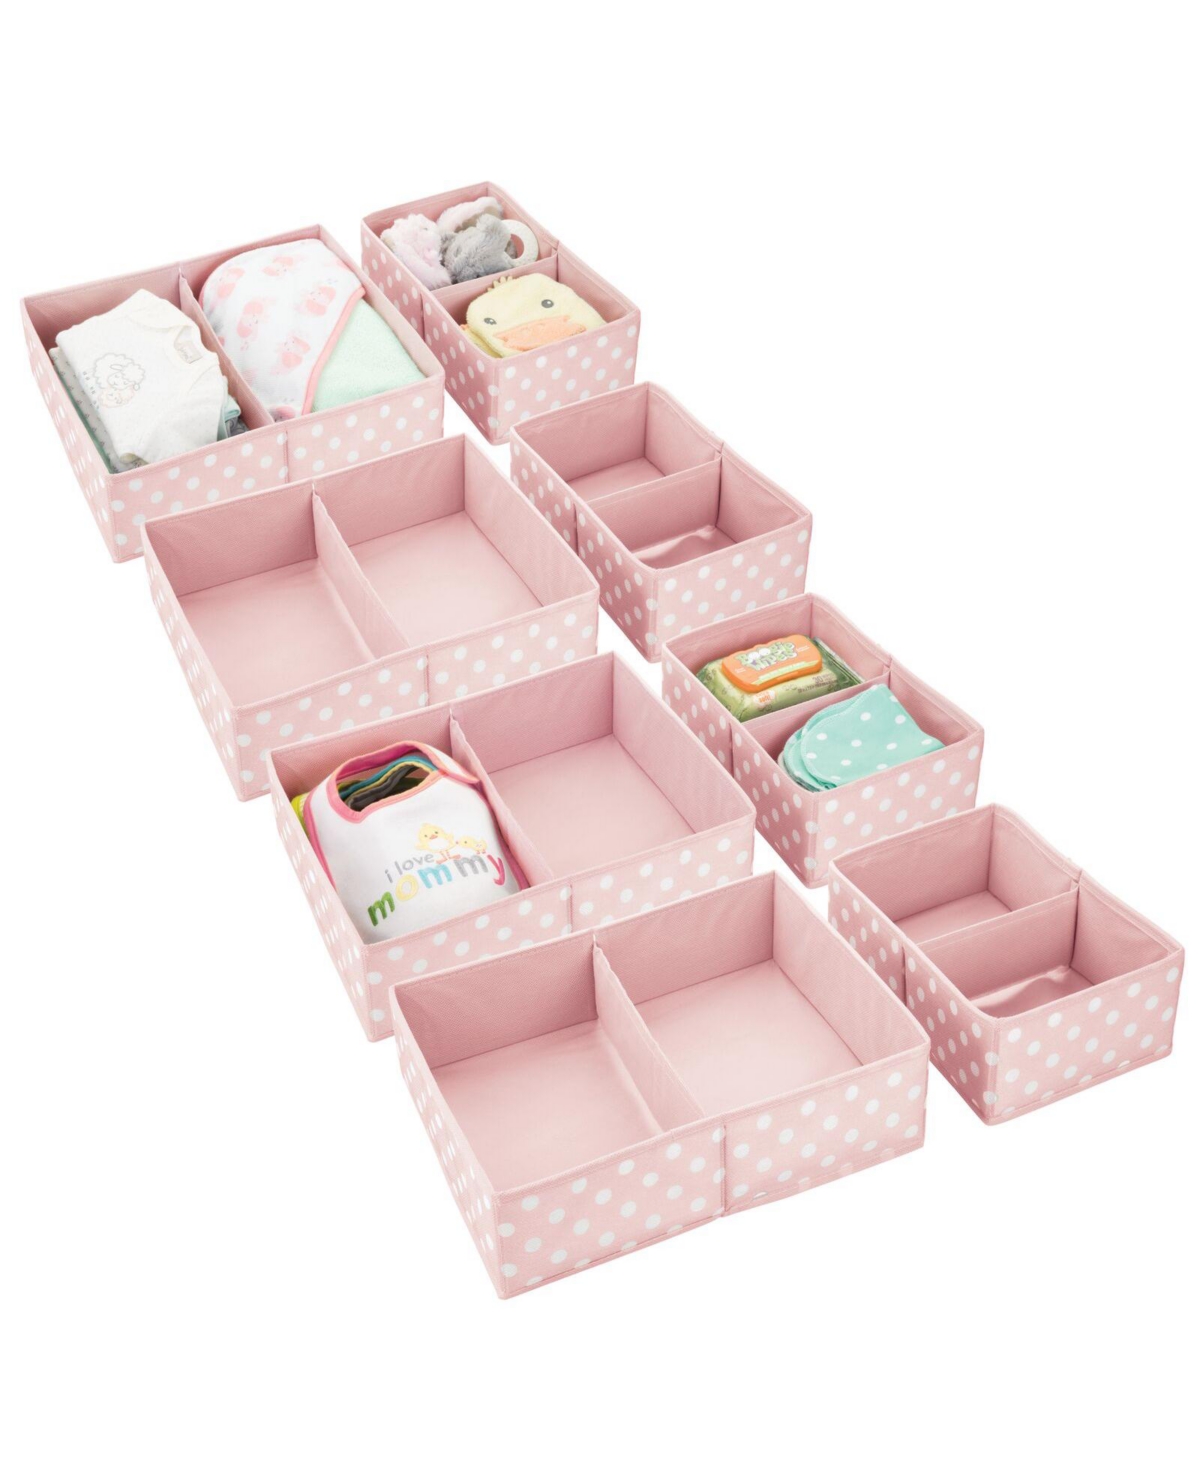 Fabric Dresser Drawer Storage Organizers, Set of 8 - Pink/white